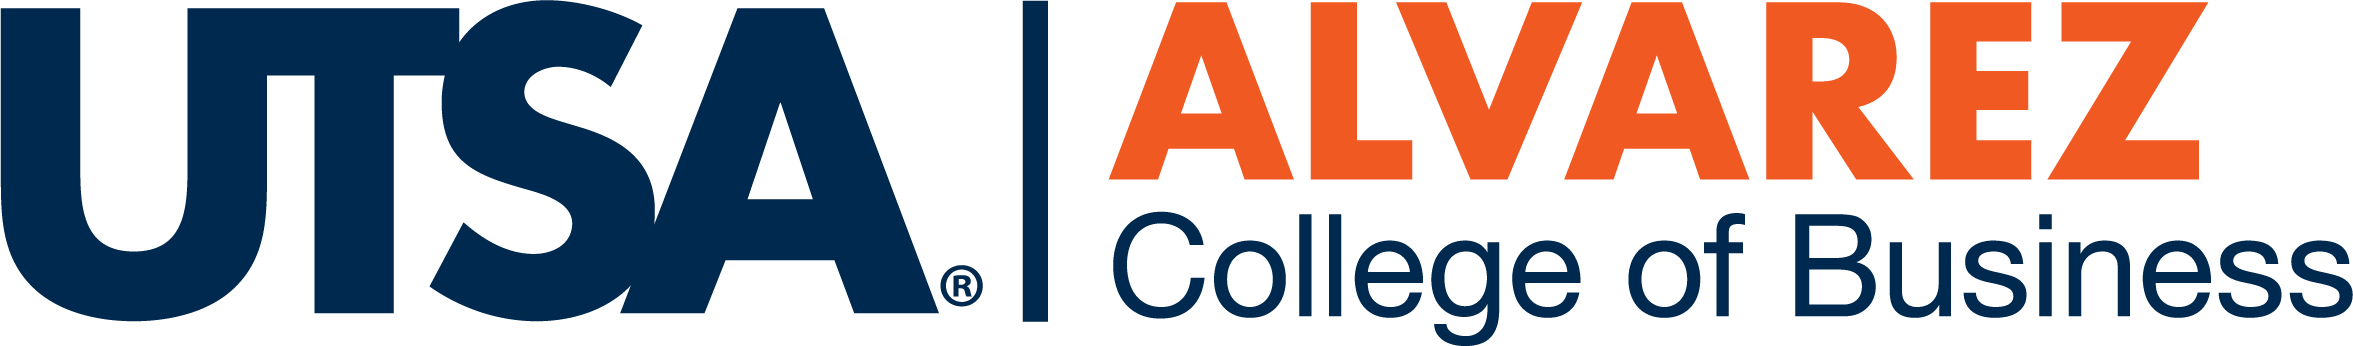 Alvarez College of Business Alumni Lunch and Learn on Strategic Alignment